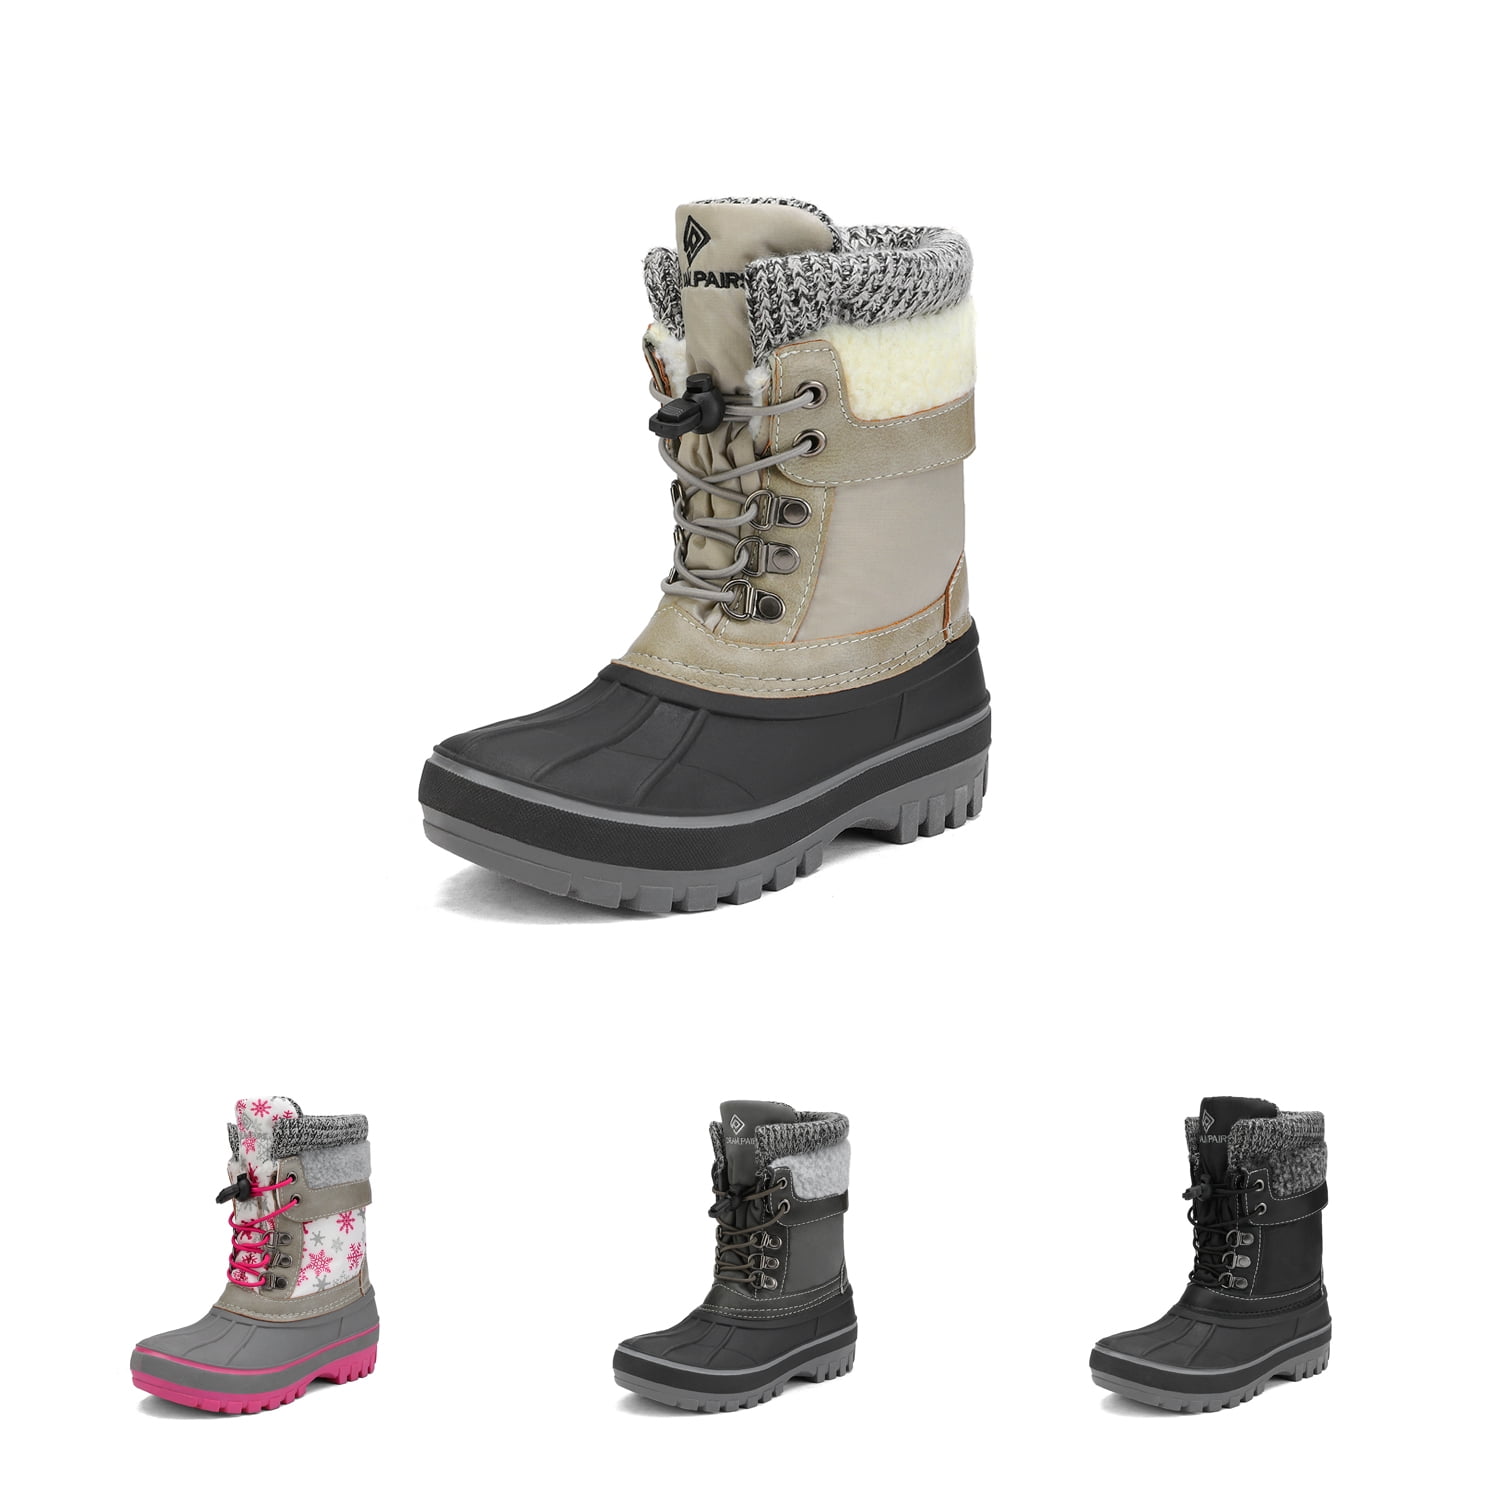 snow boots infant size 5